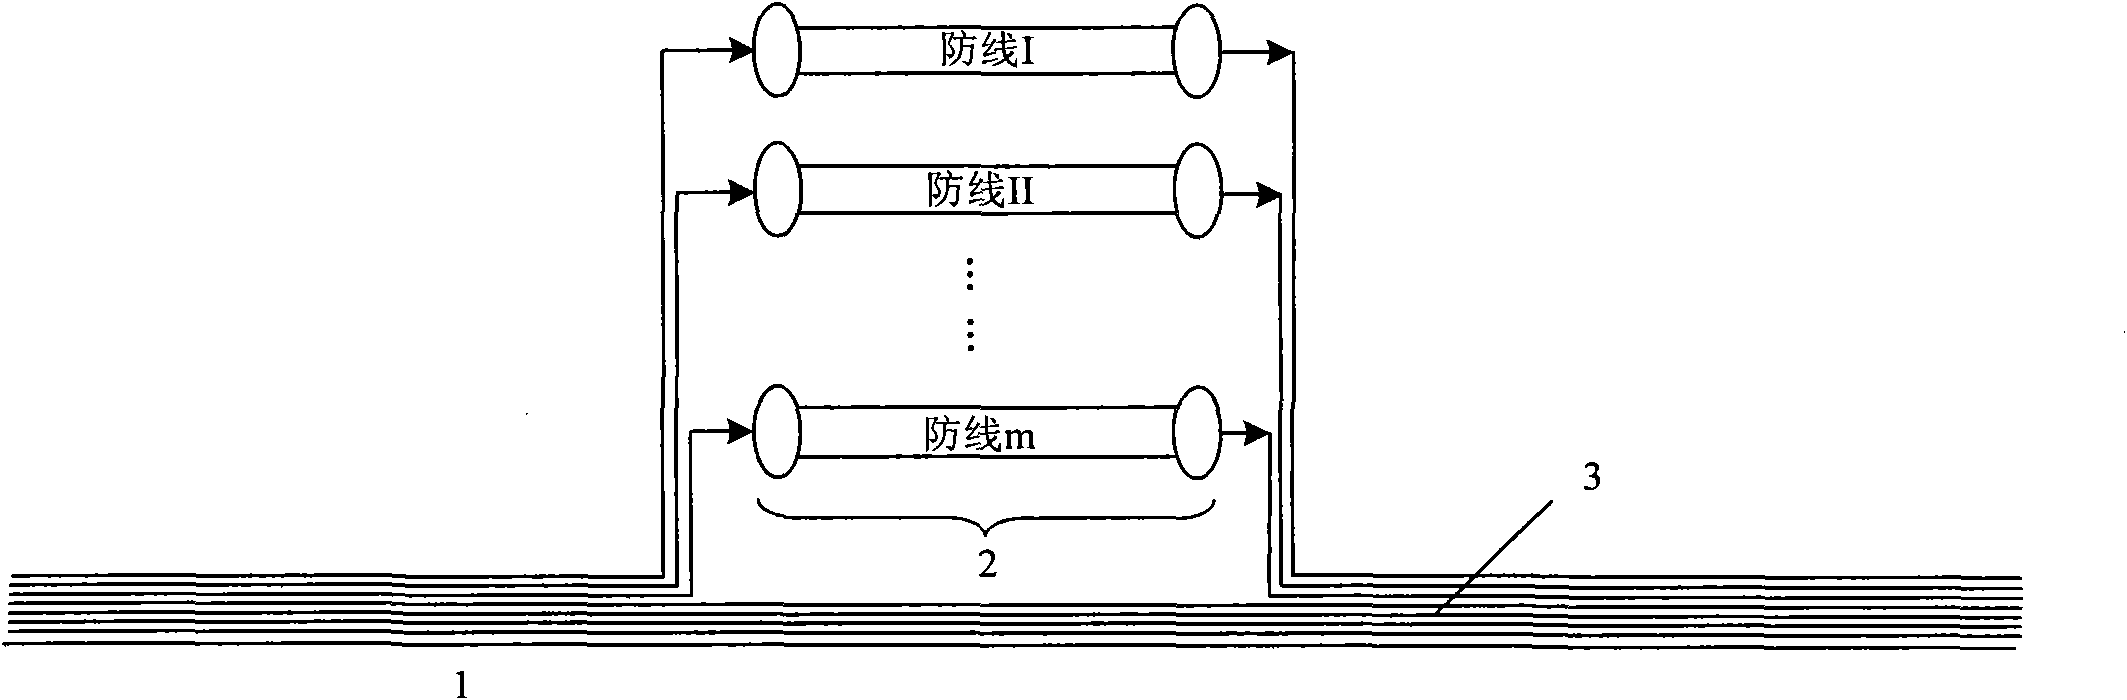 Optical fiber interferometer arrangement method of region anti-intrusion system based on optical fiber interferometer